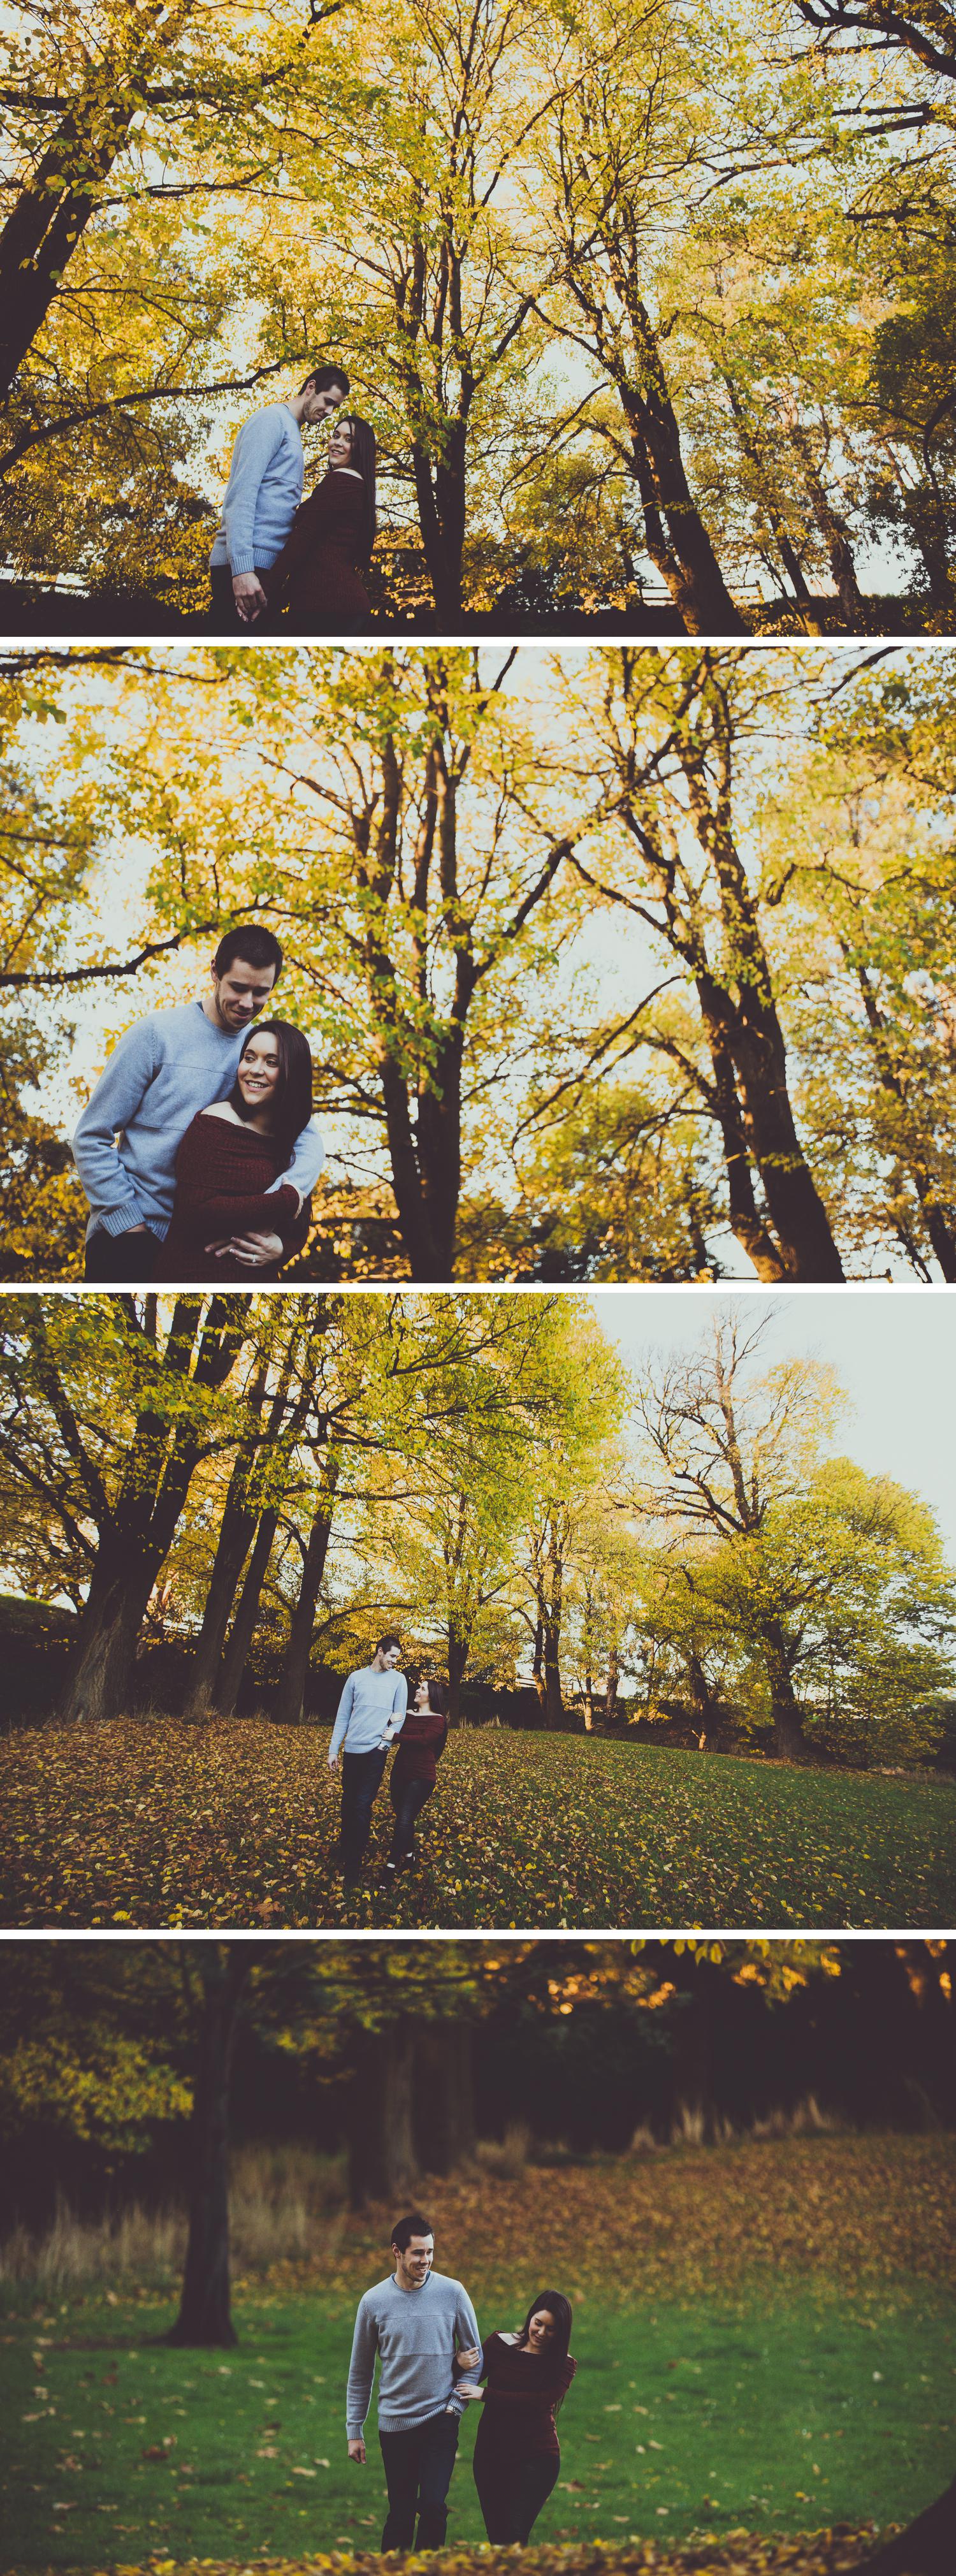 Park Photoshoot Engagement Shoot, Couple Embracing, Soft Light by Danae Studios